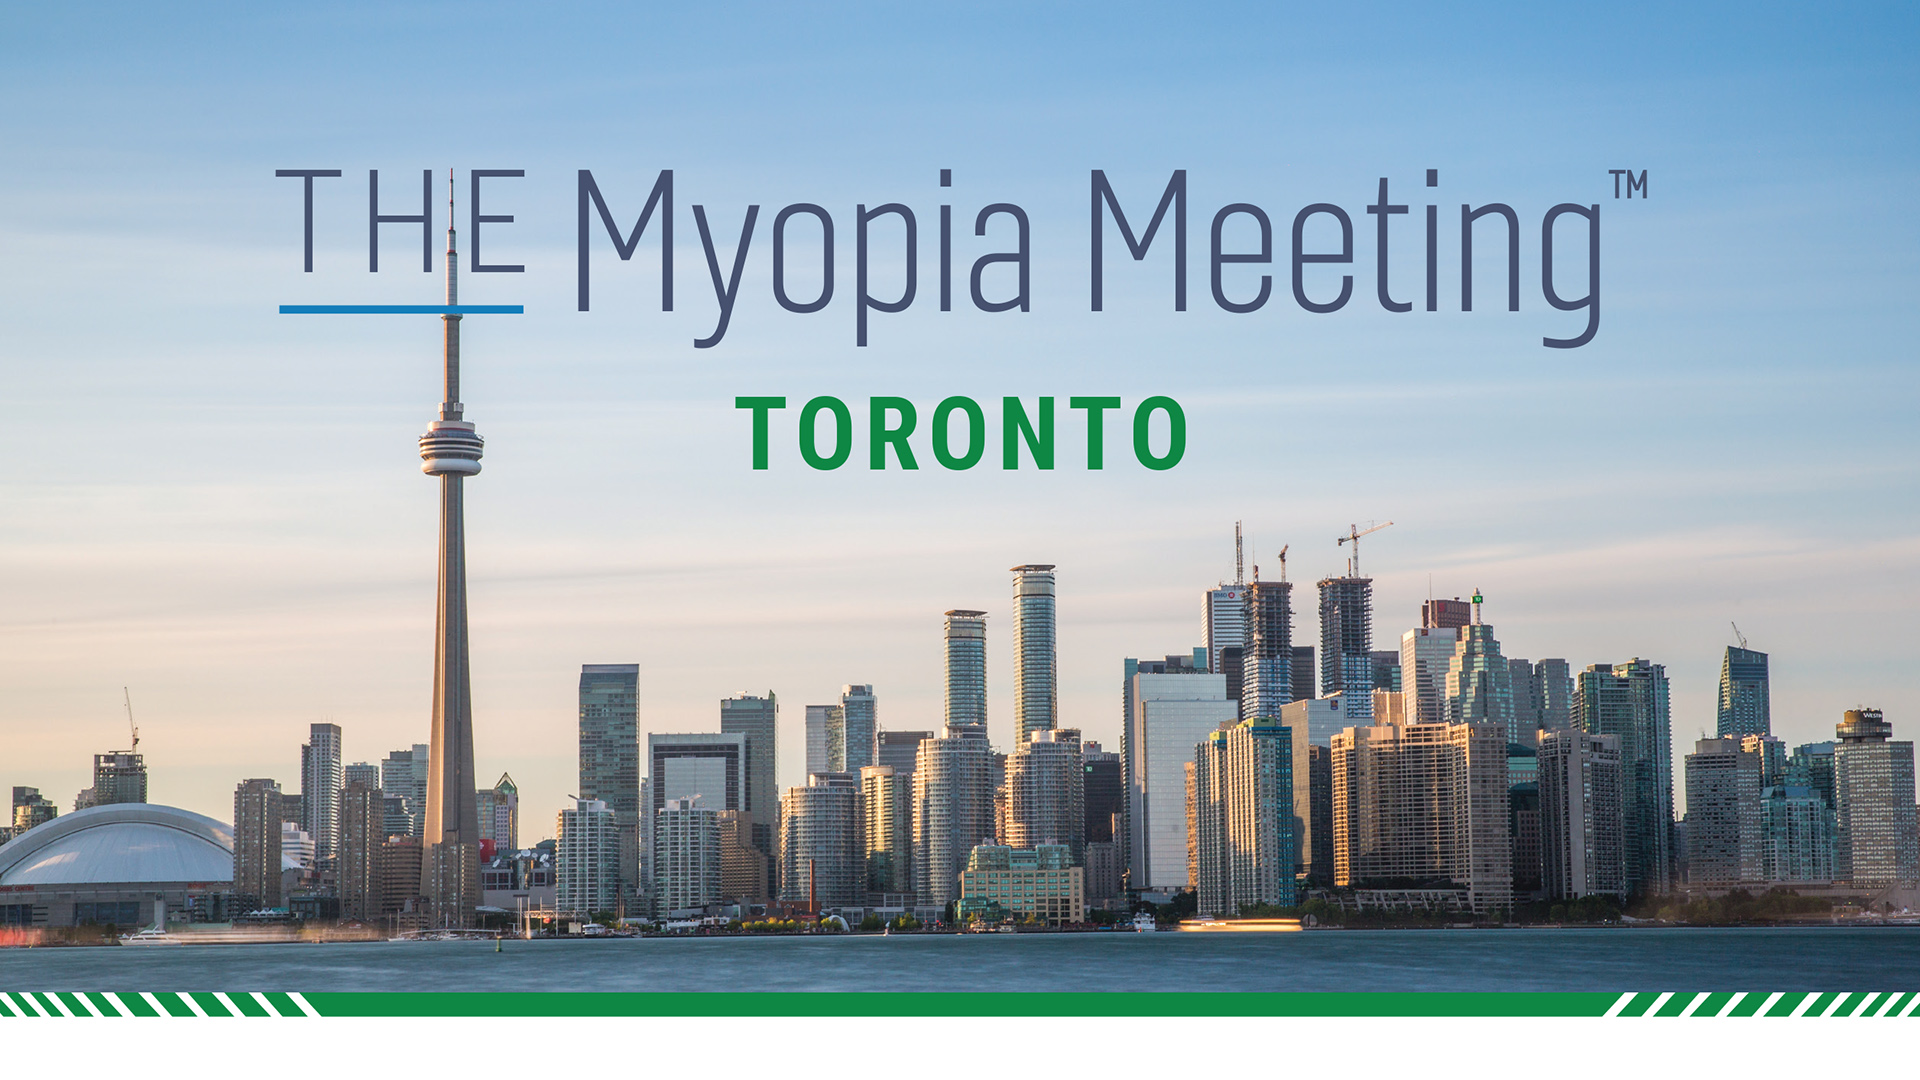 The Myopia Meeting Toronto